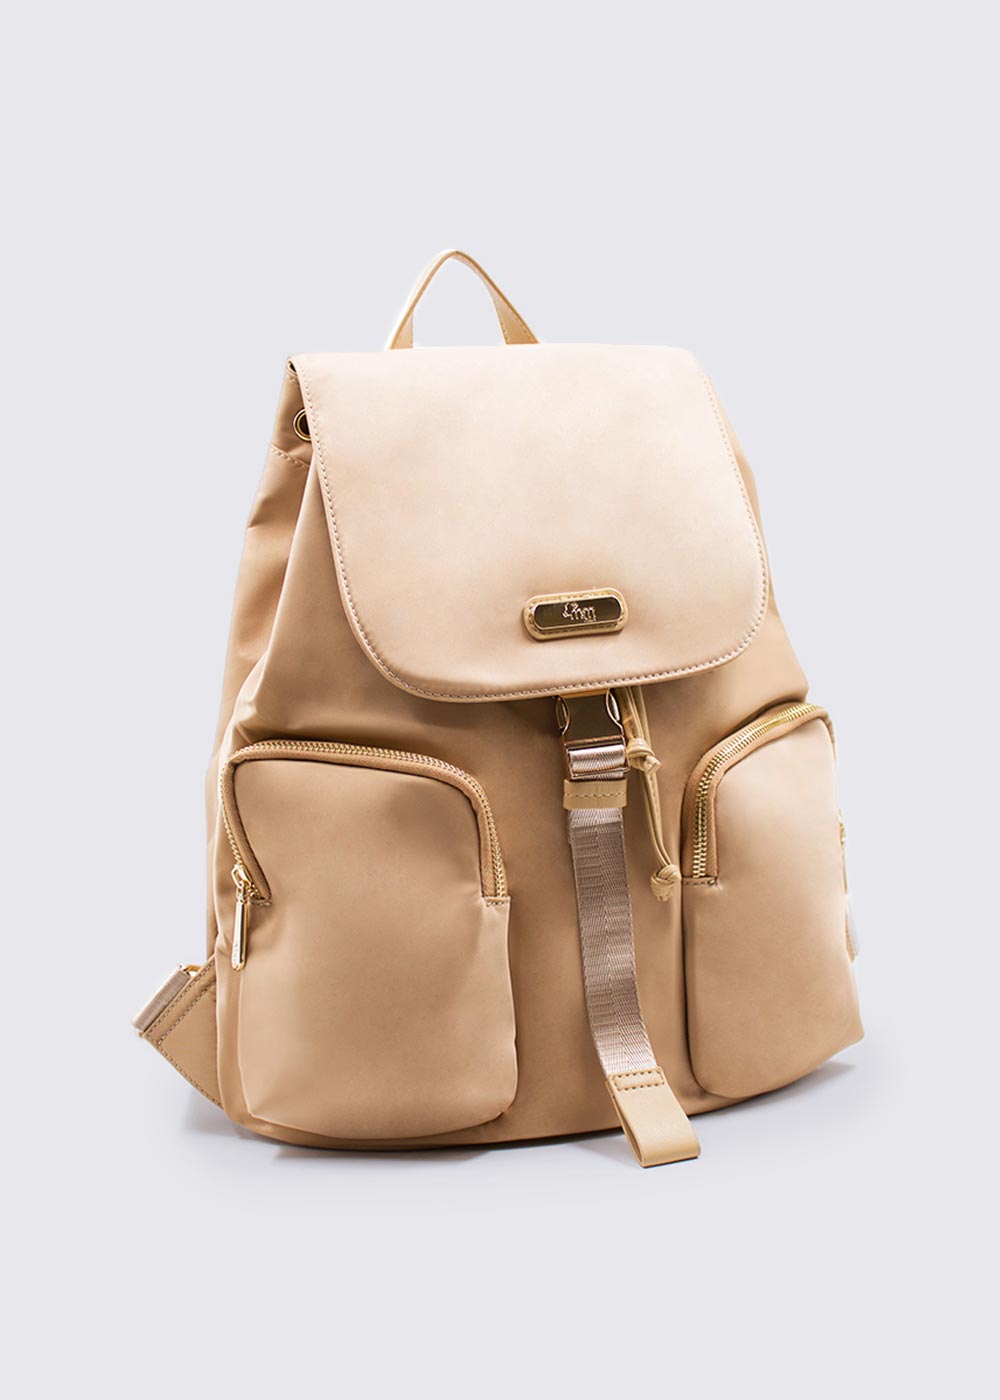 Mini Backpack Beige con Bolsas | Epicland